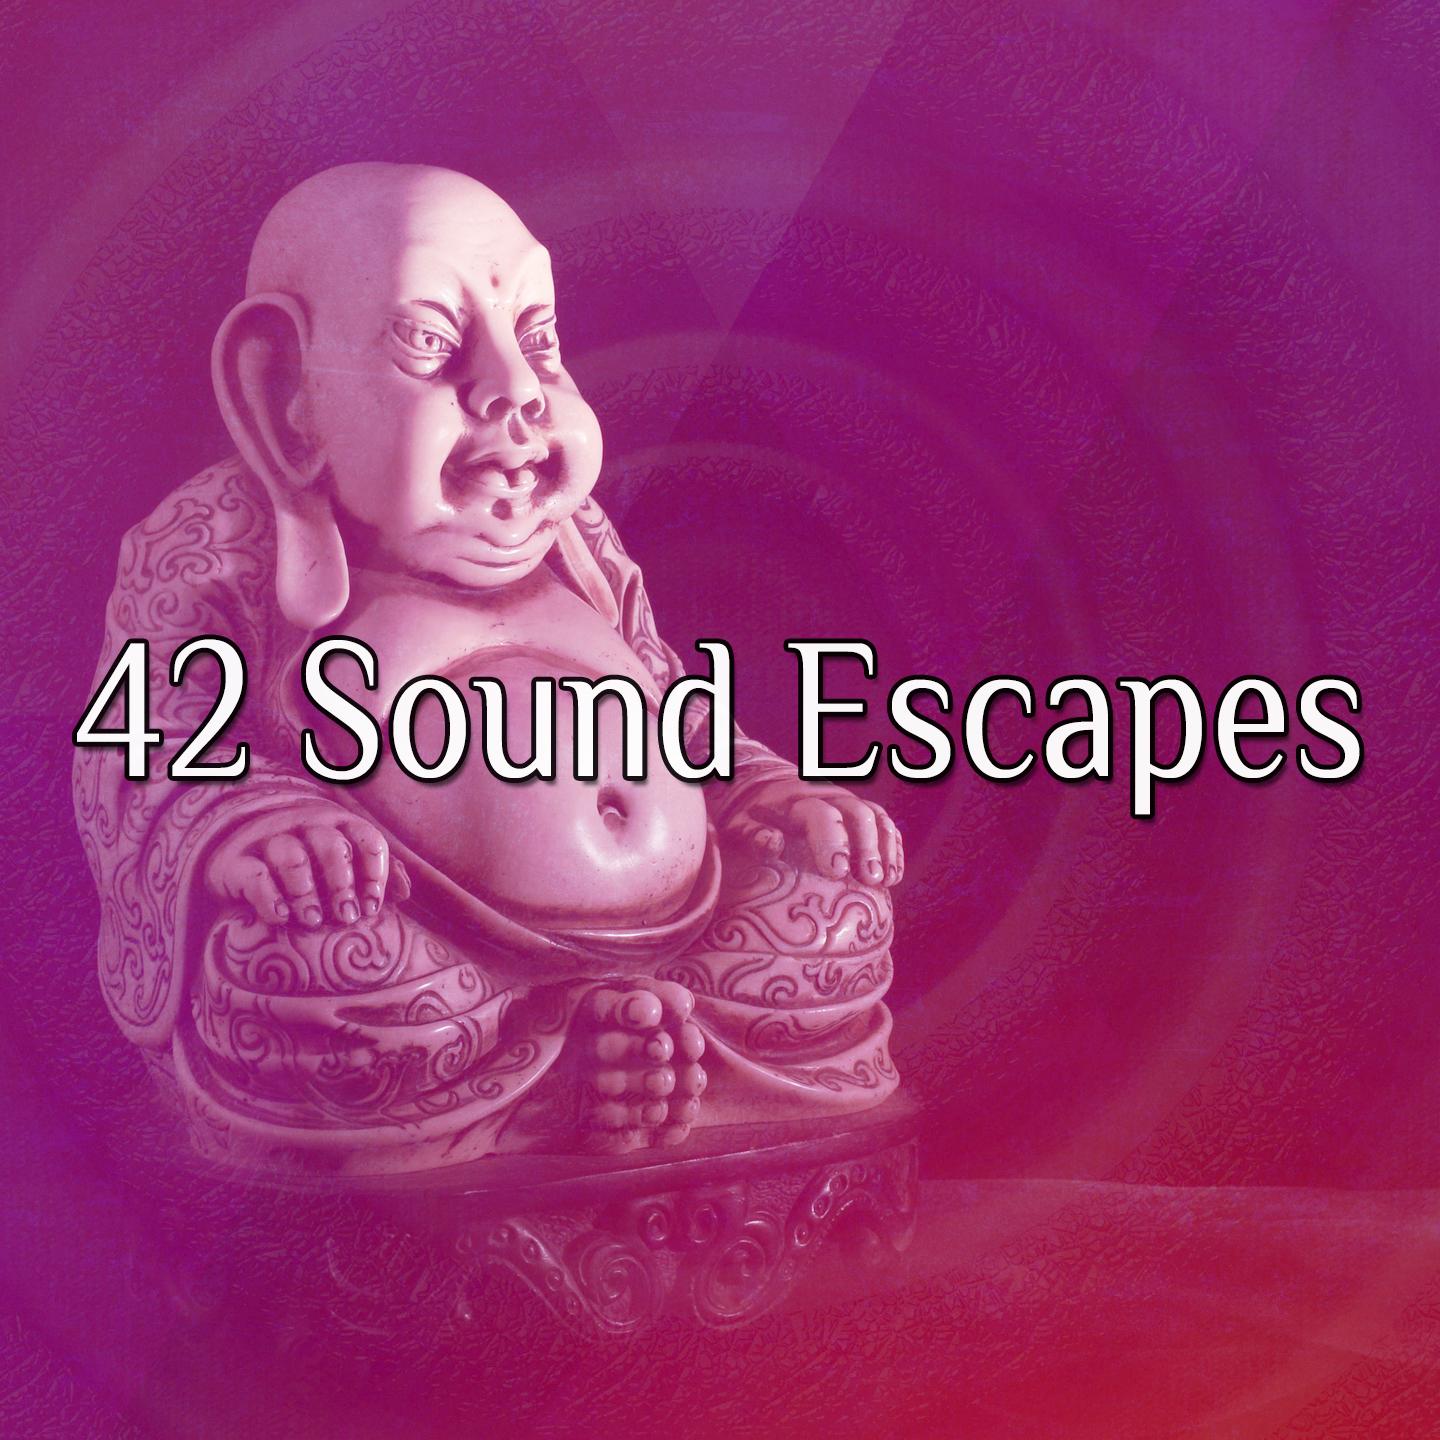 42 Sound Escapes